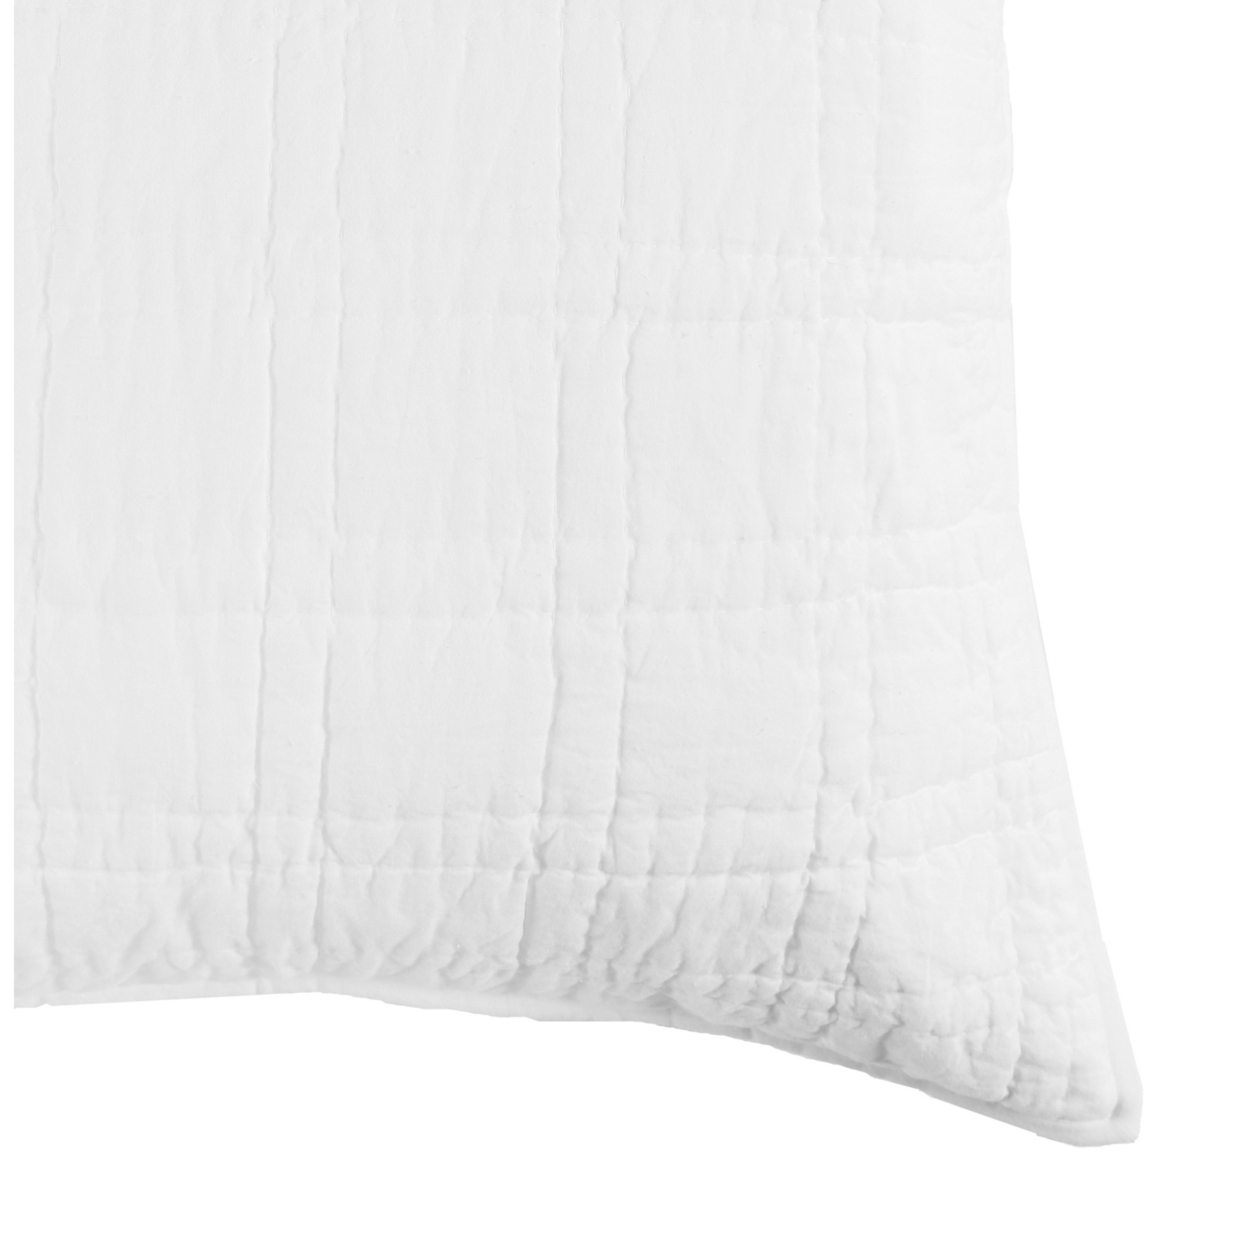 Ellis 26 Inch Standard Pillow Sham, Silvadur Tech, Square Quilting, White- Saltoro Sherpi